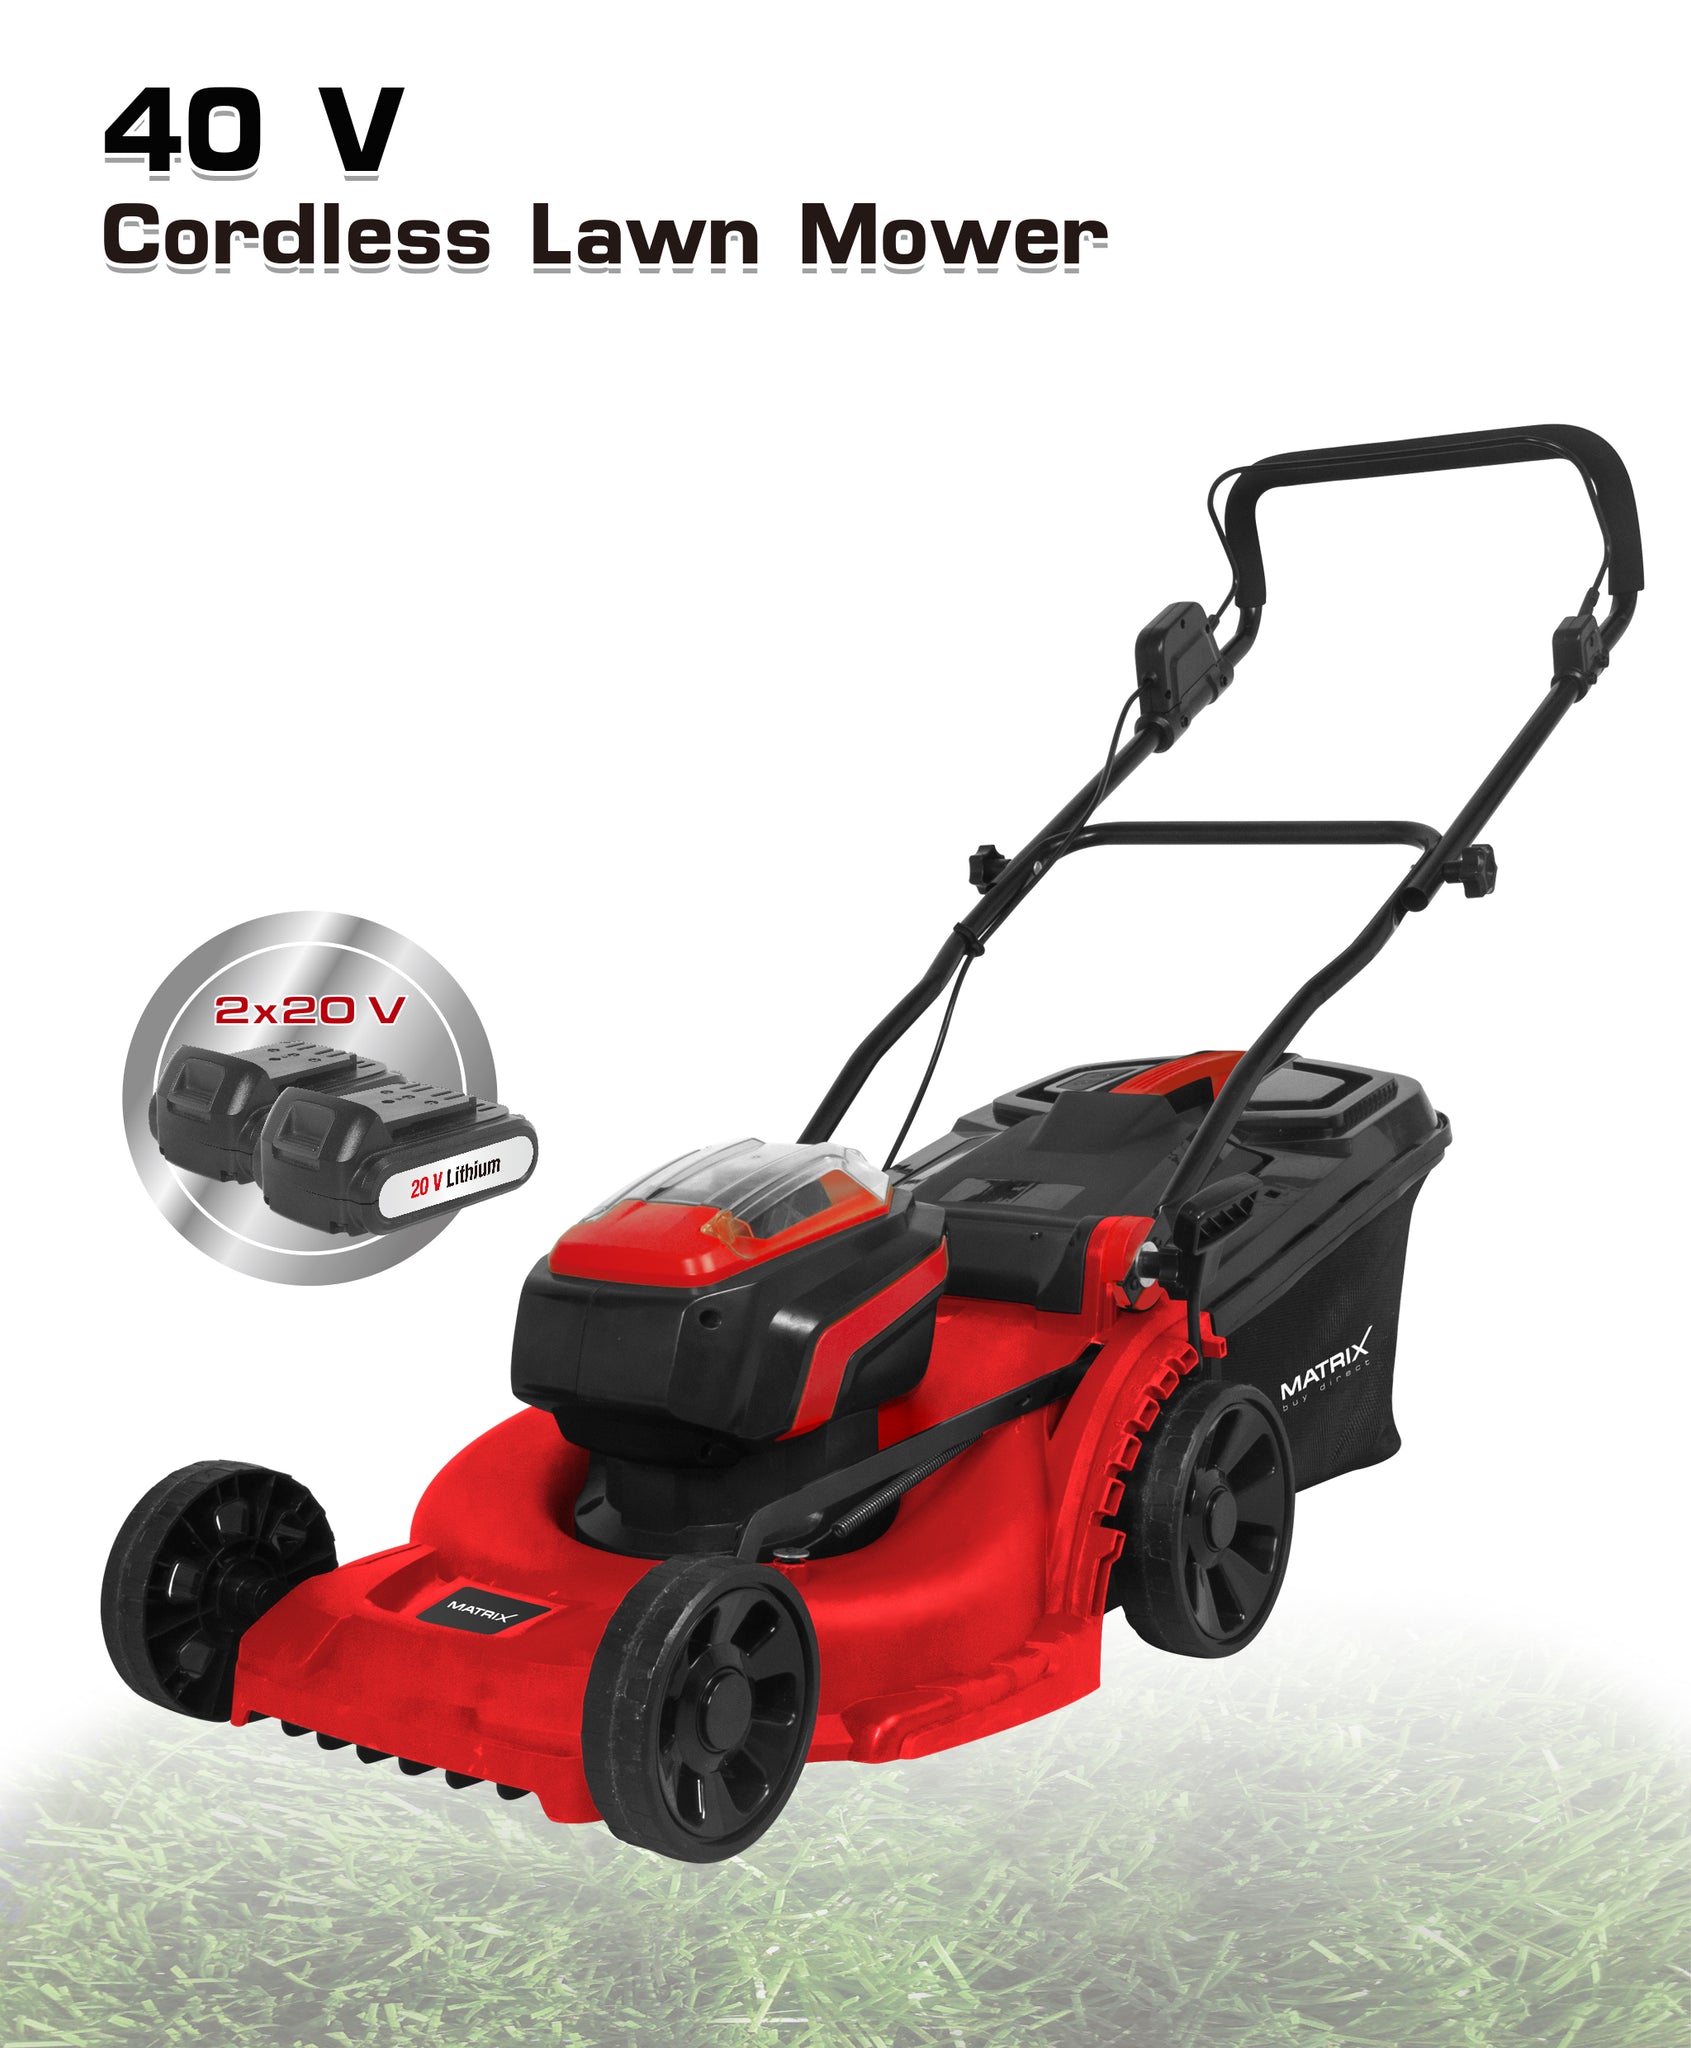 the lawn mower 2.0 australia